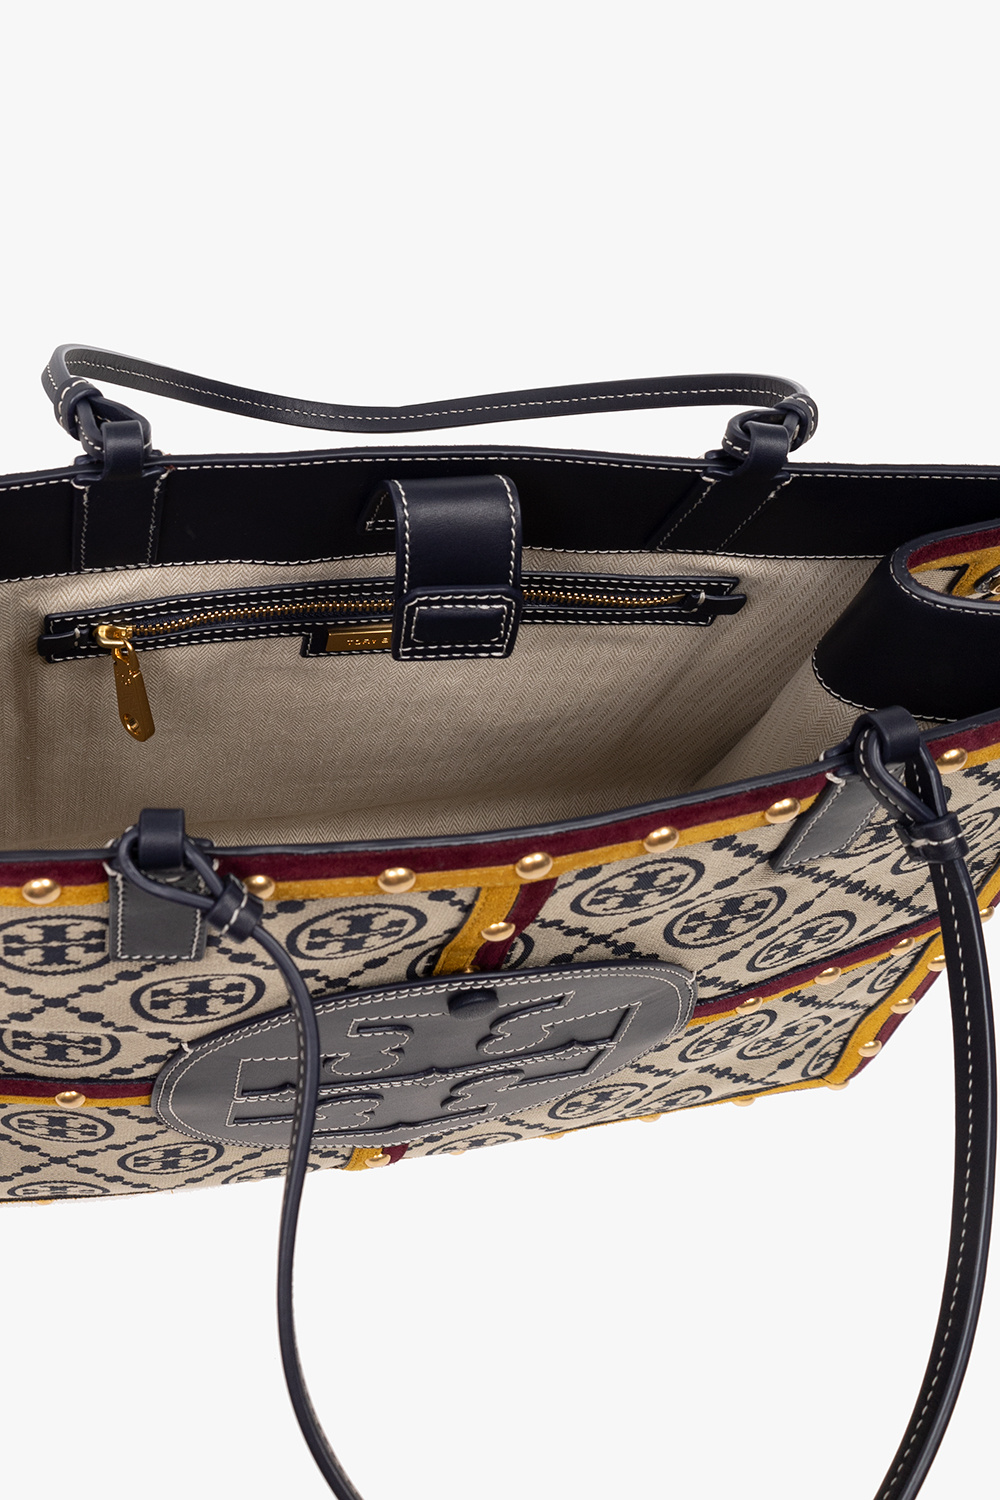 Grailed x Mr.K Custom Louis Vuitton Bag Giveaway